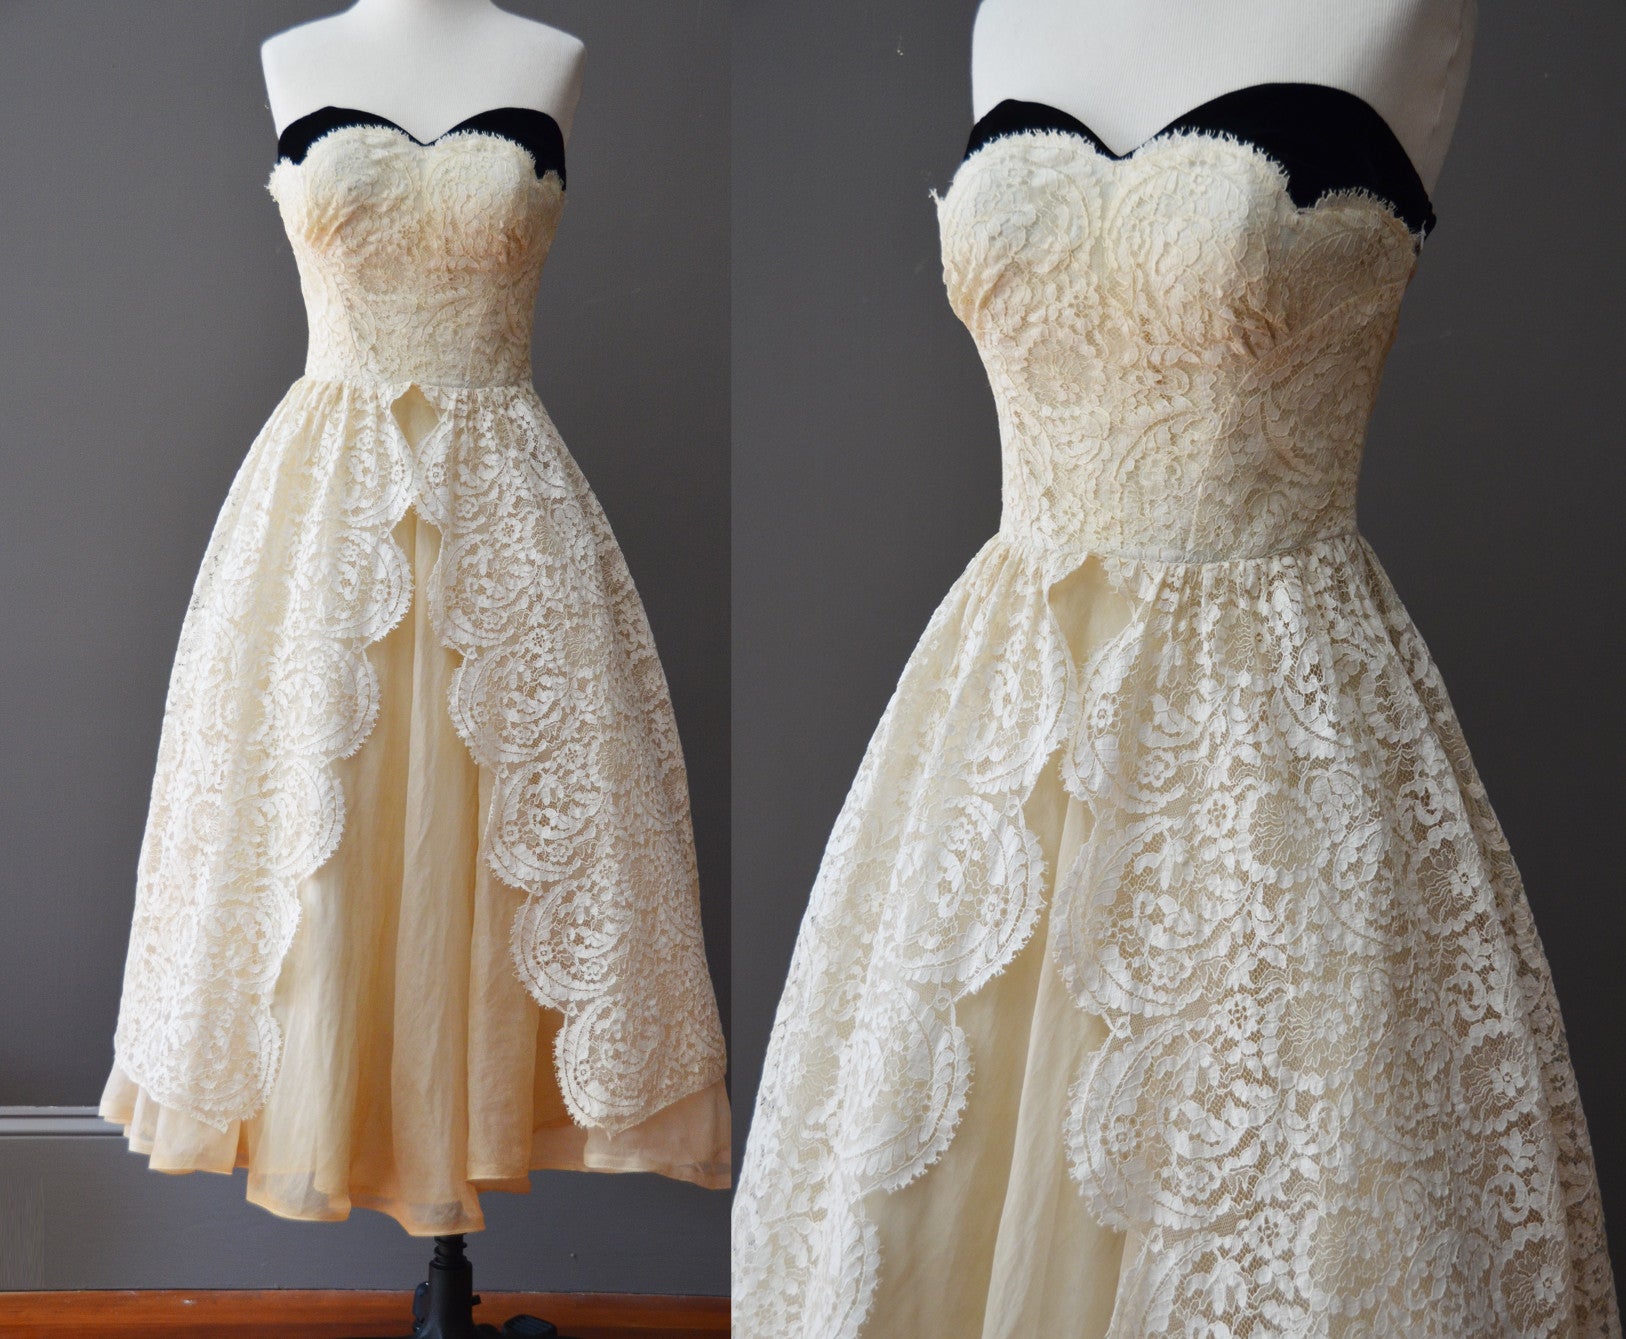 Cream lace dress